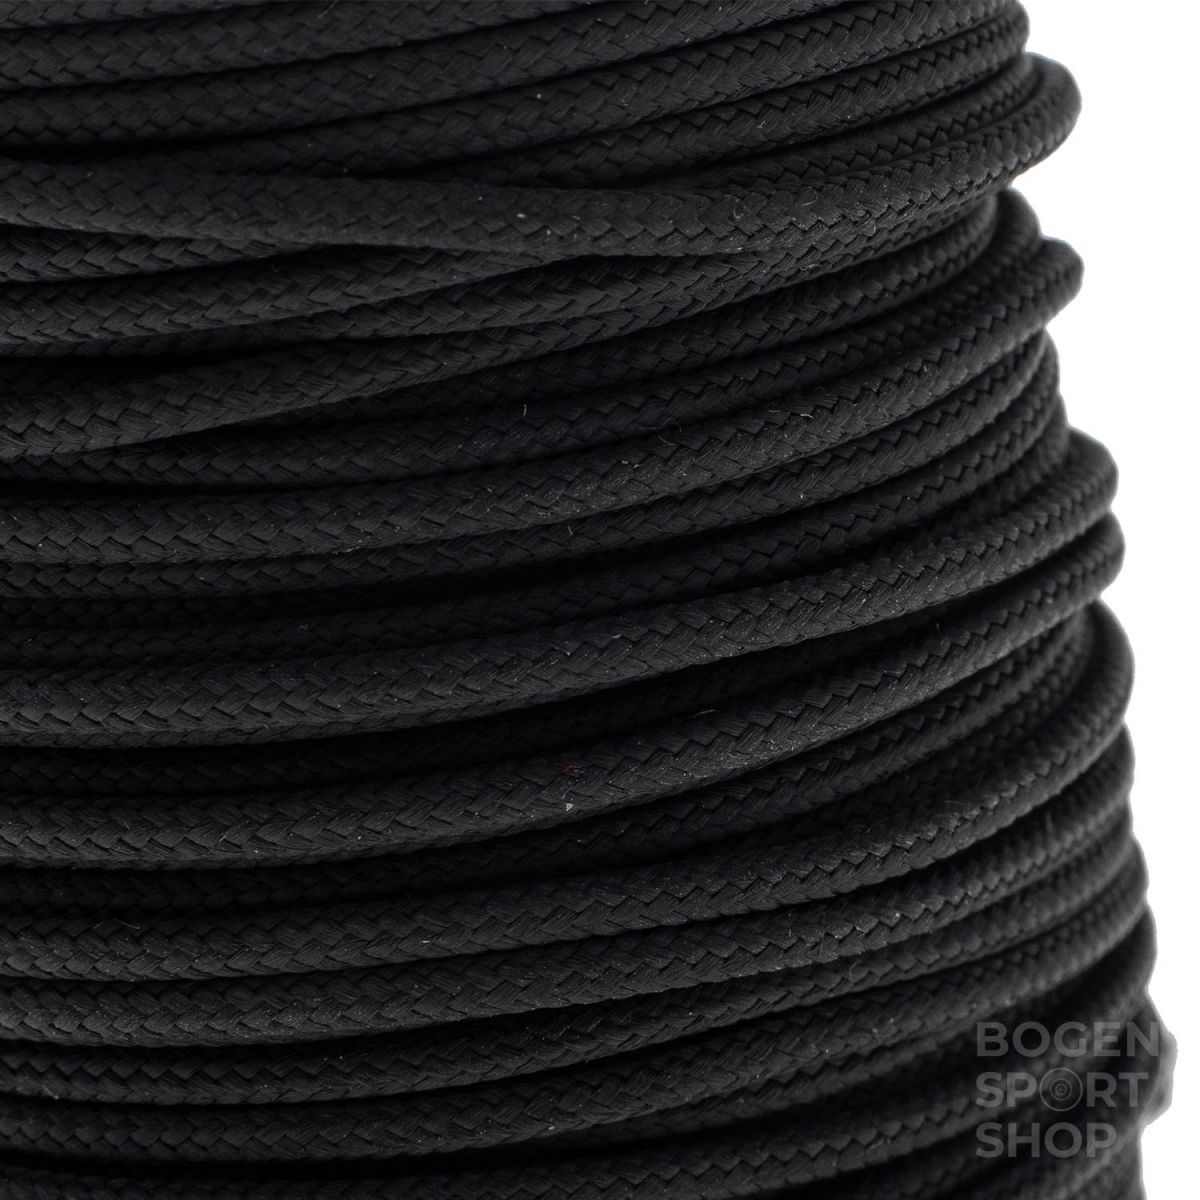 BCY D-Loop Rope .060" / 1.6 mm Braided Polyester Black or Silver - 30 m Spool